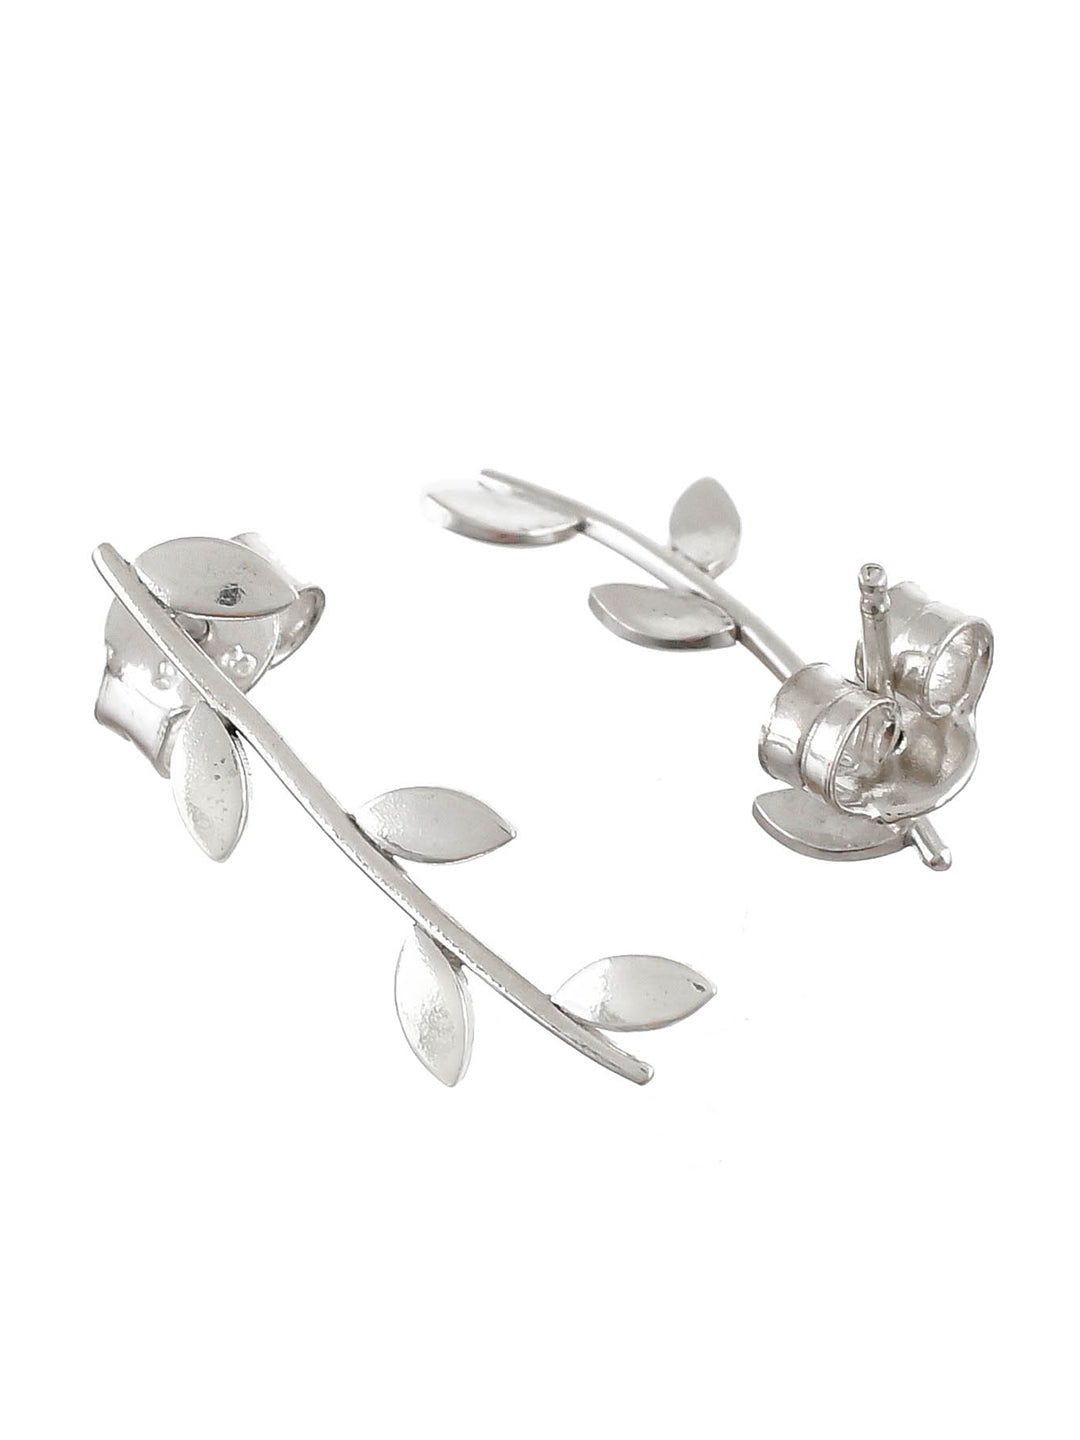 Minimalist Daily Wear Sterling Silver Leaf Studs Earring For Girls